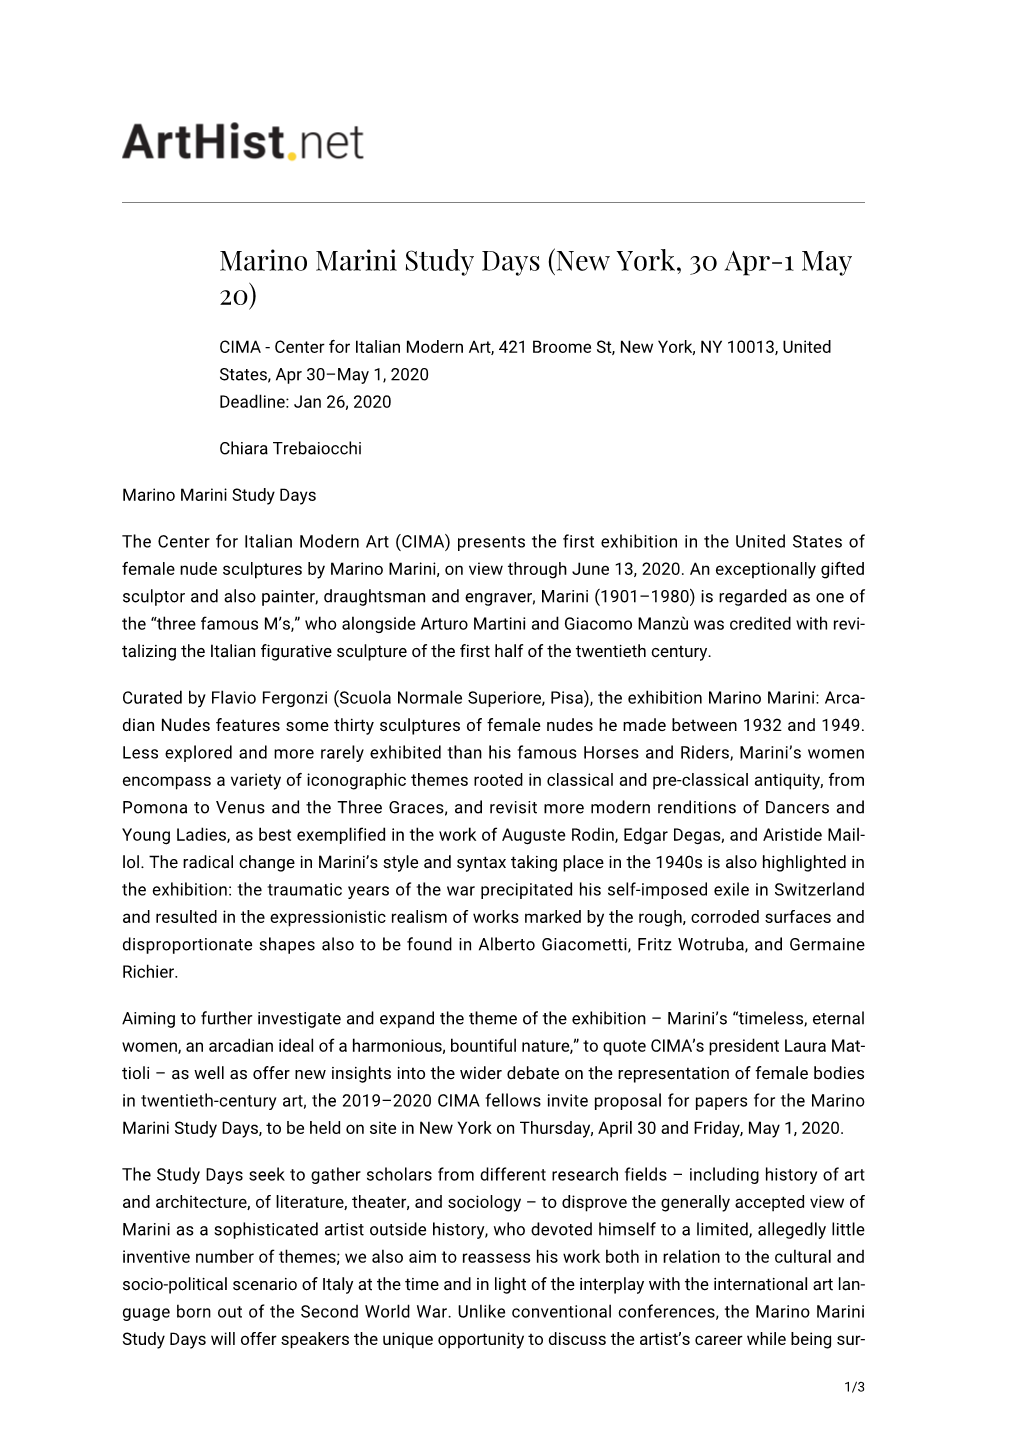 Marino Marini Study Days (New York, 30 Apr-1 May 20)